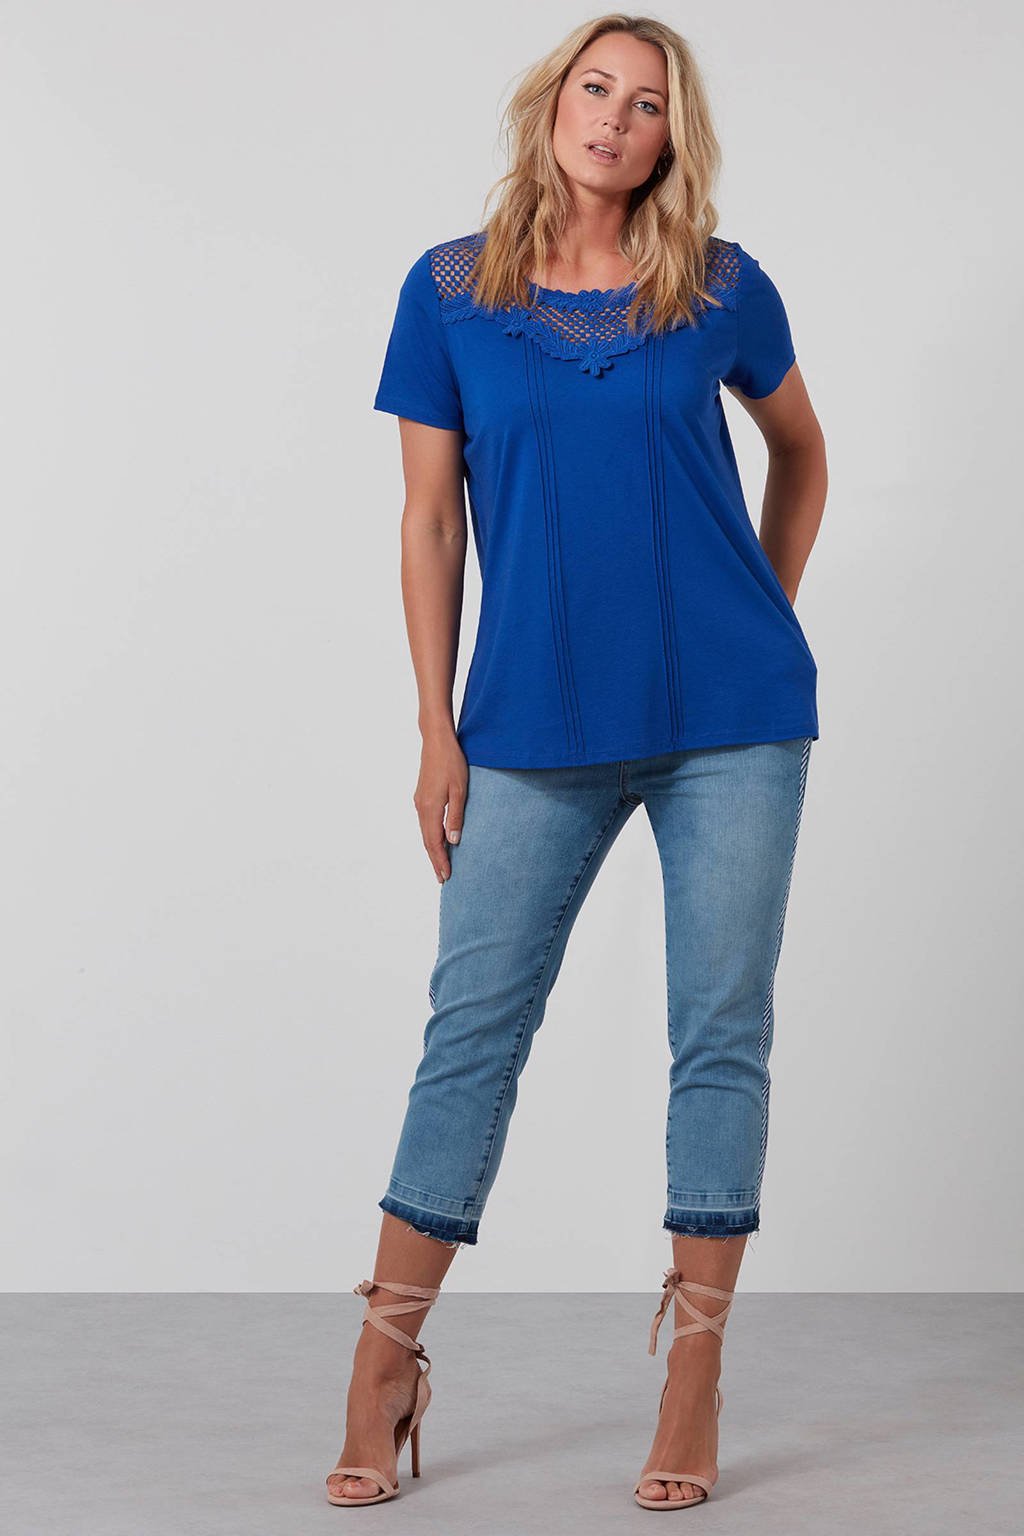 West stromen Mis MS Mode T-shirt kobaltblauw | wehkamp